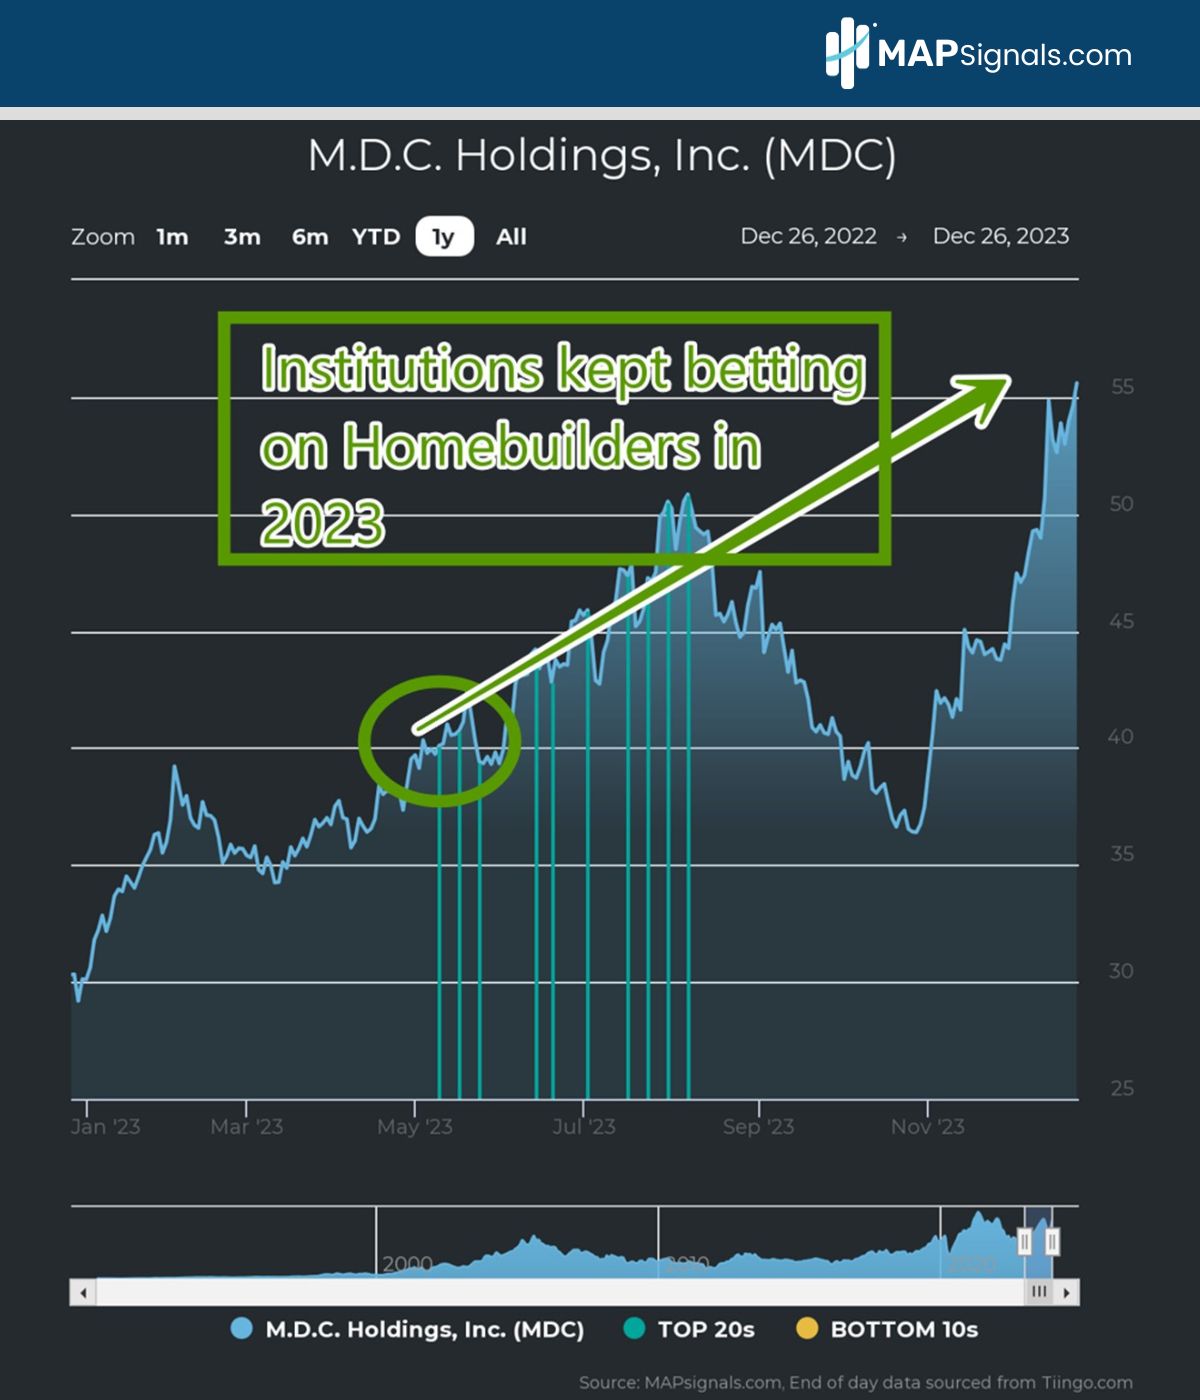 M.D.C. Holdings, Inc. (MDC) | MAPsignals